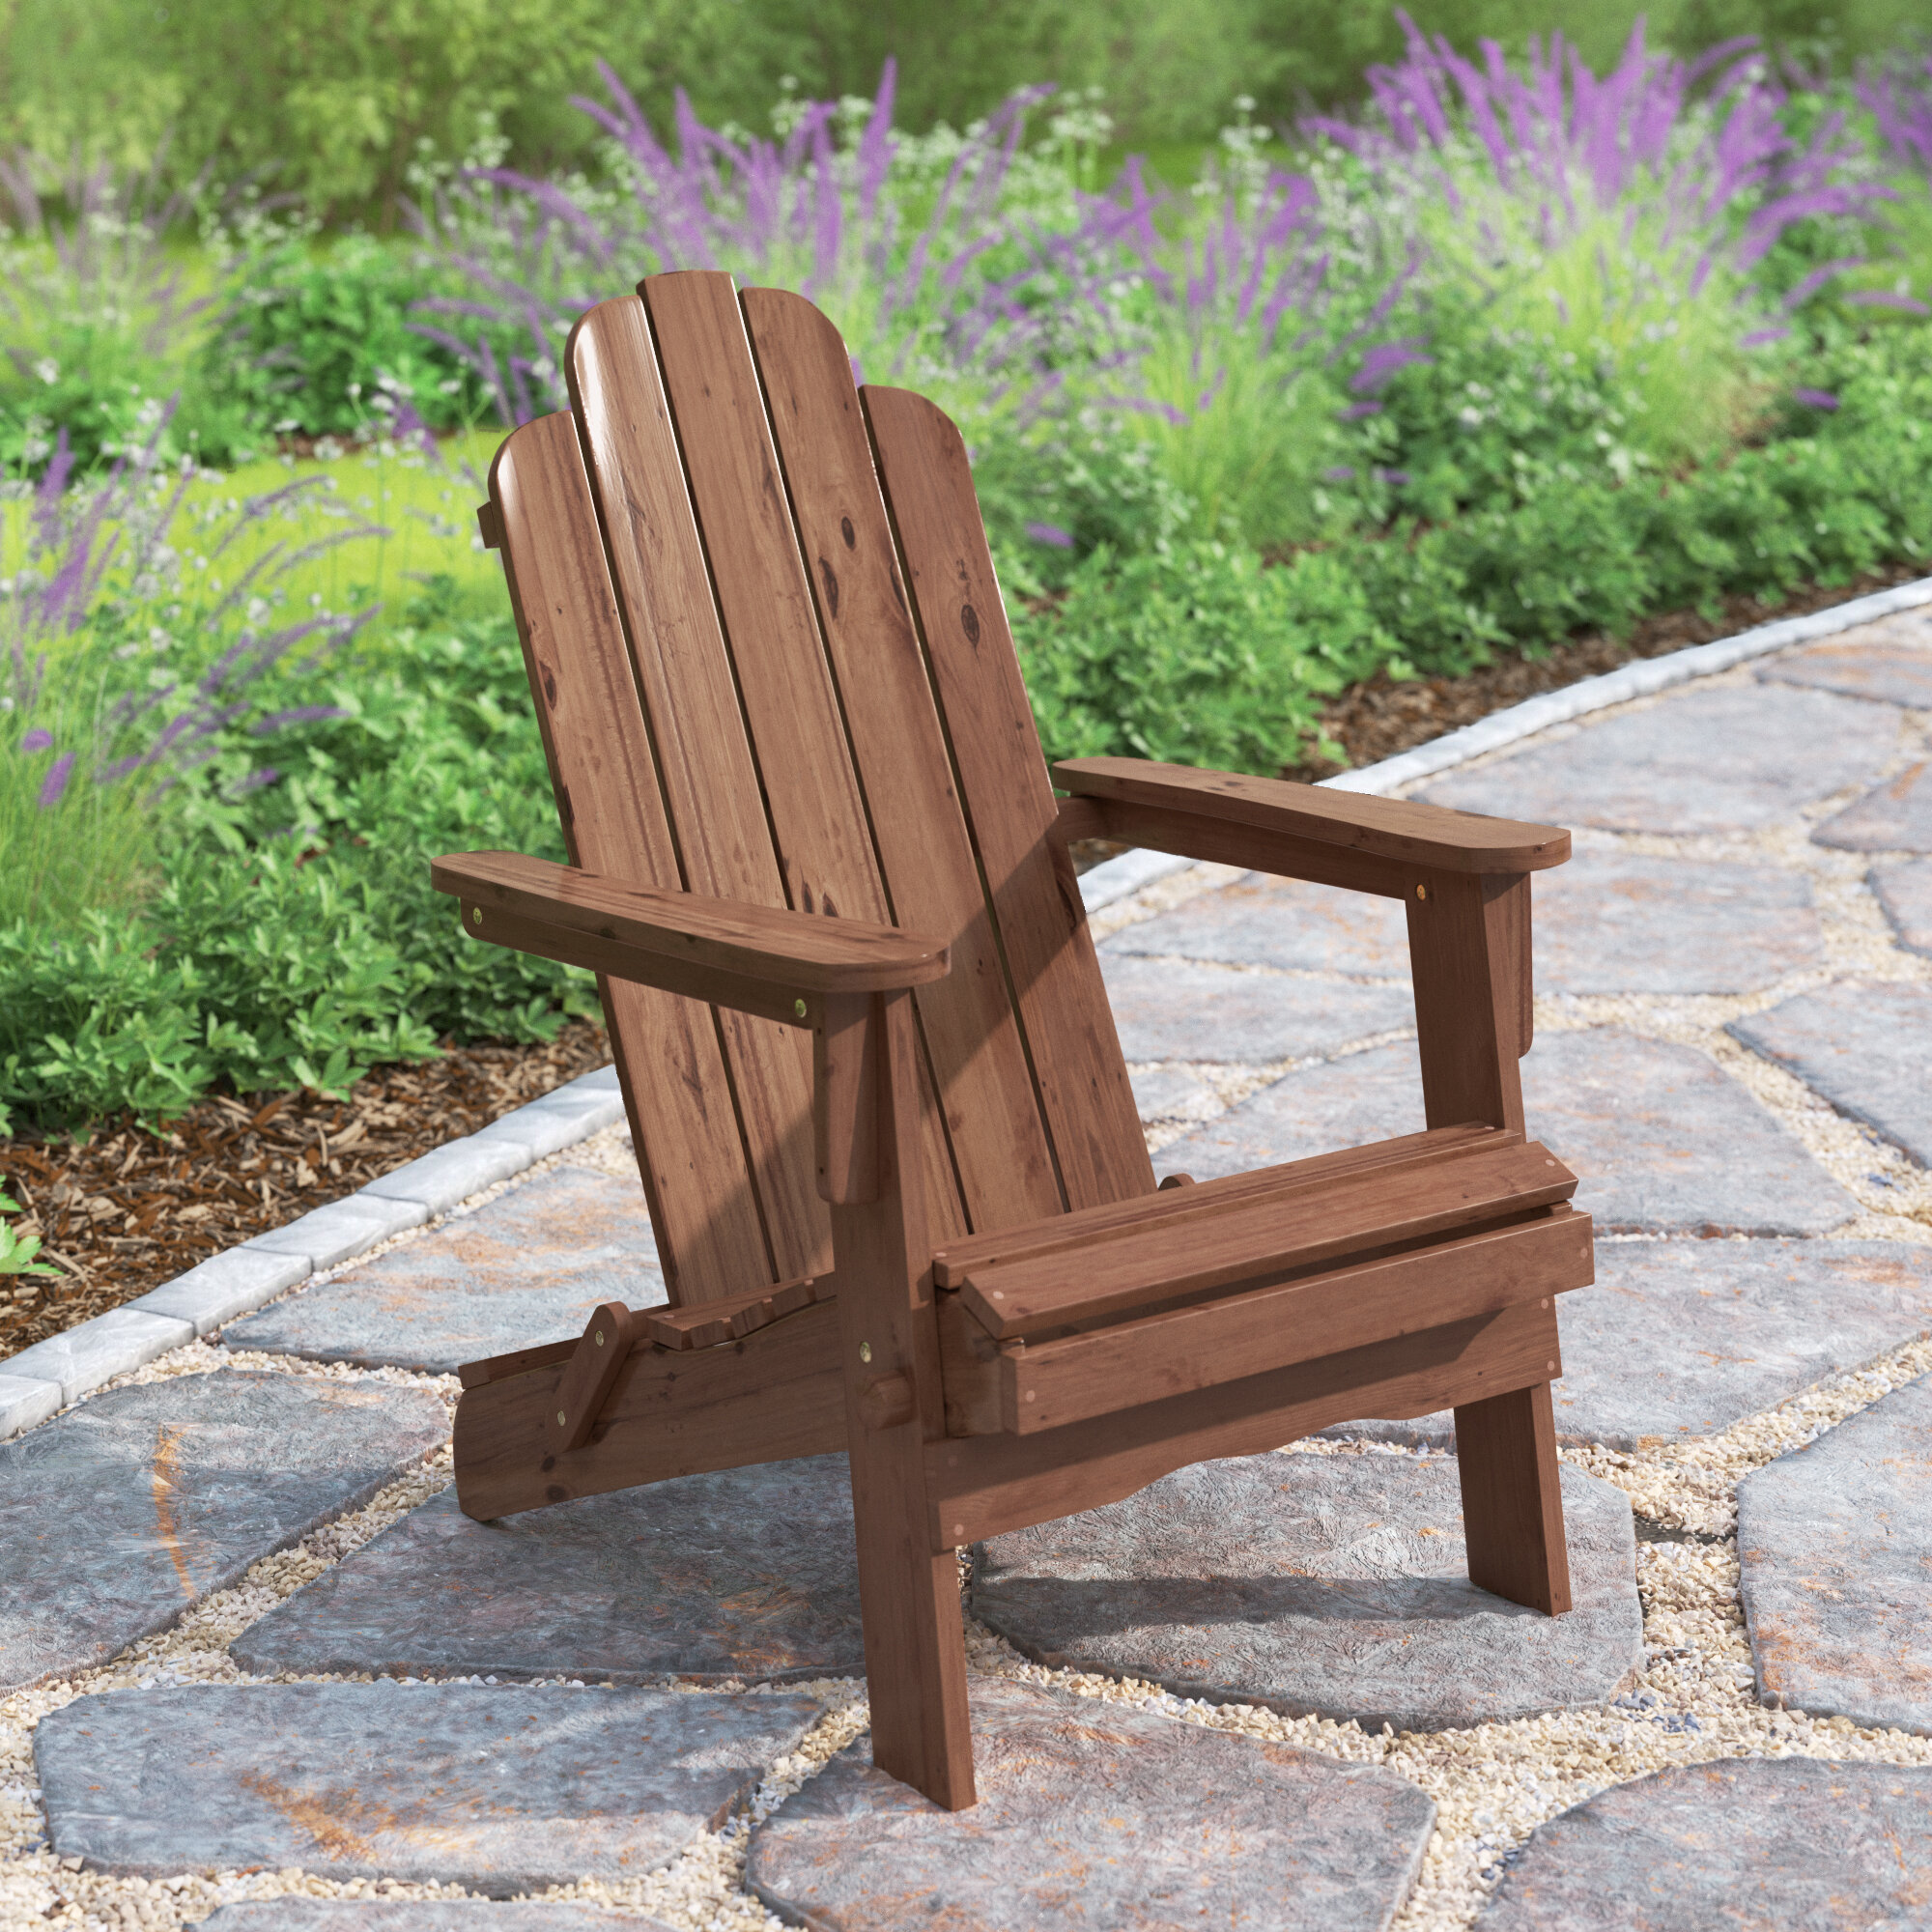 Adirondack Chair Heavyduty Waterproof Wooden Wood Outdoor Garden Beach Furniture 